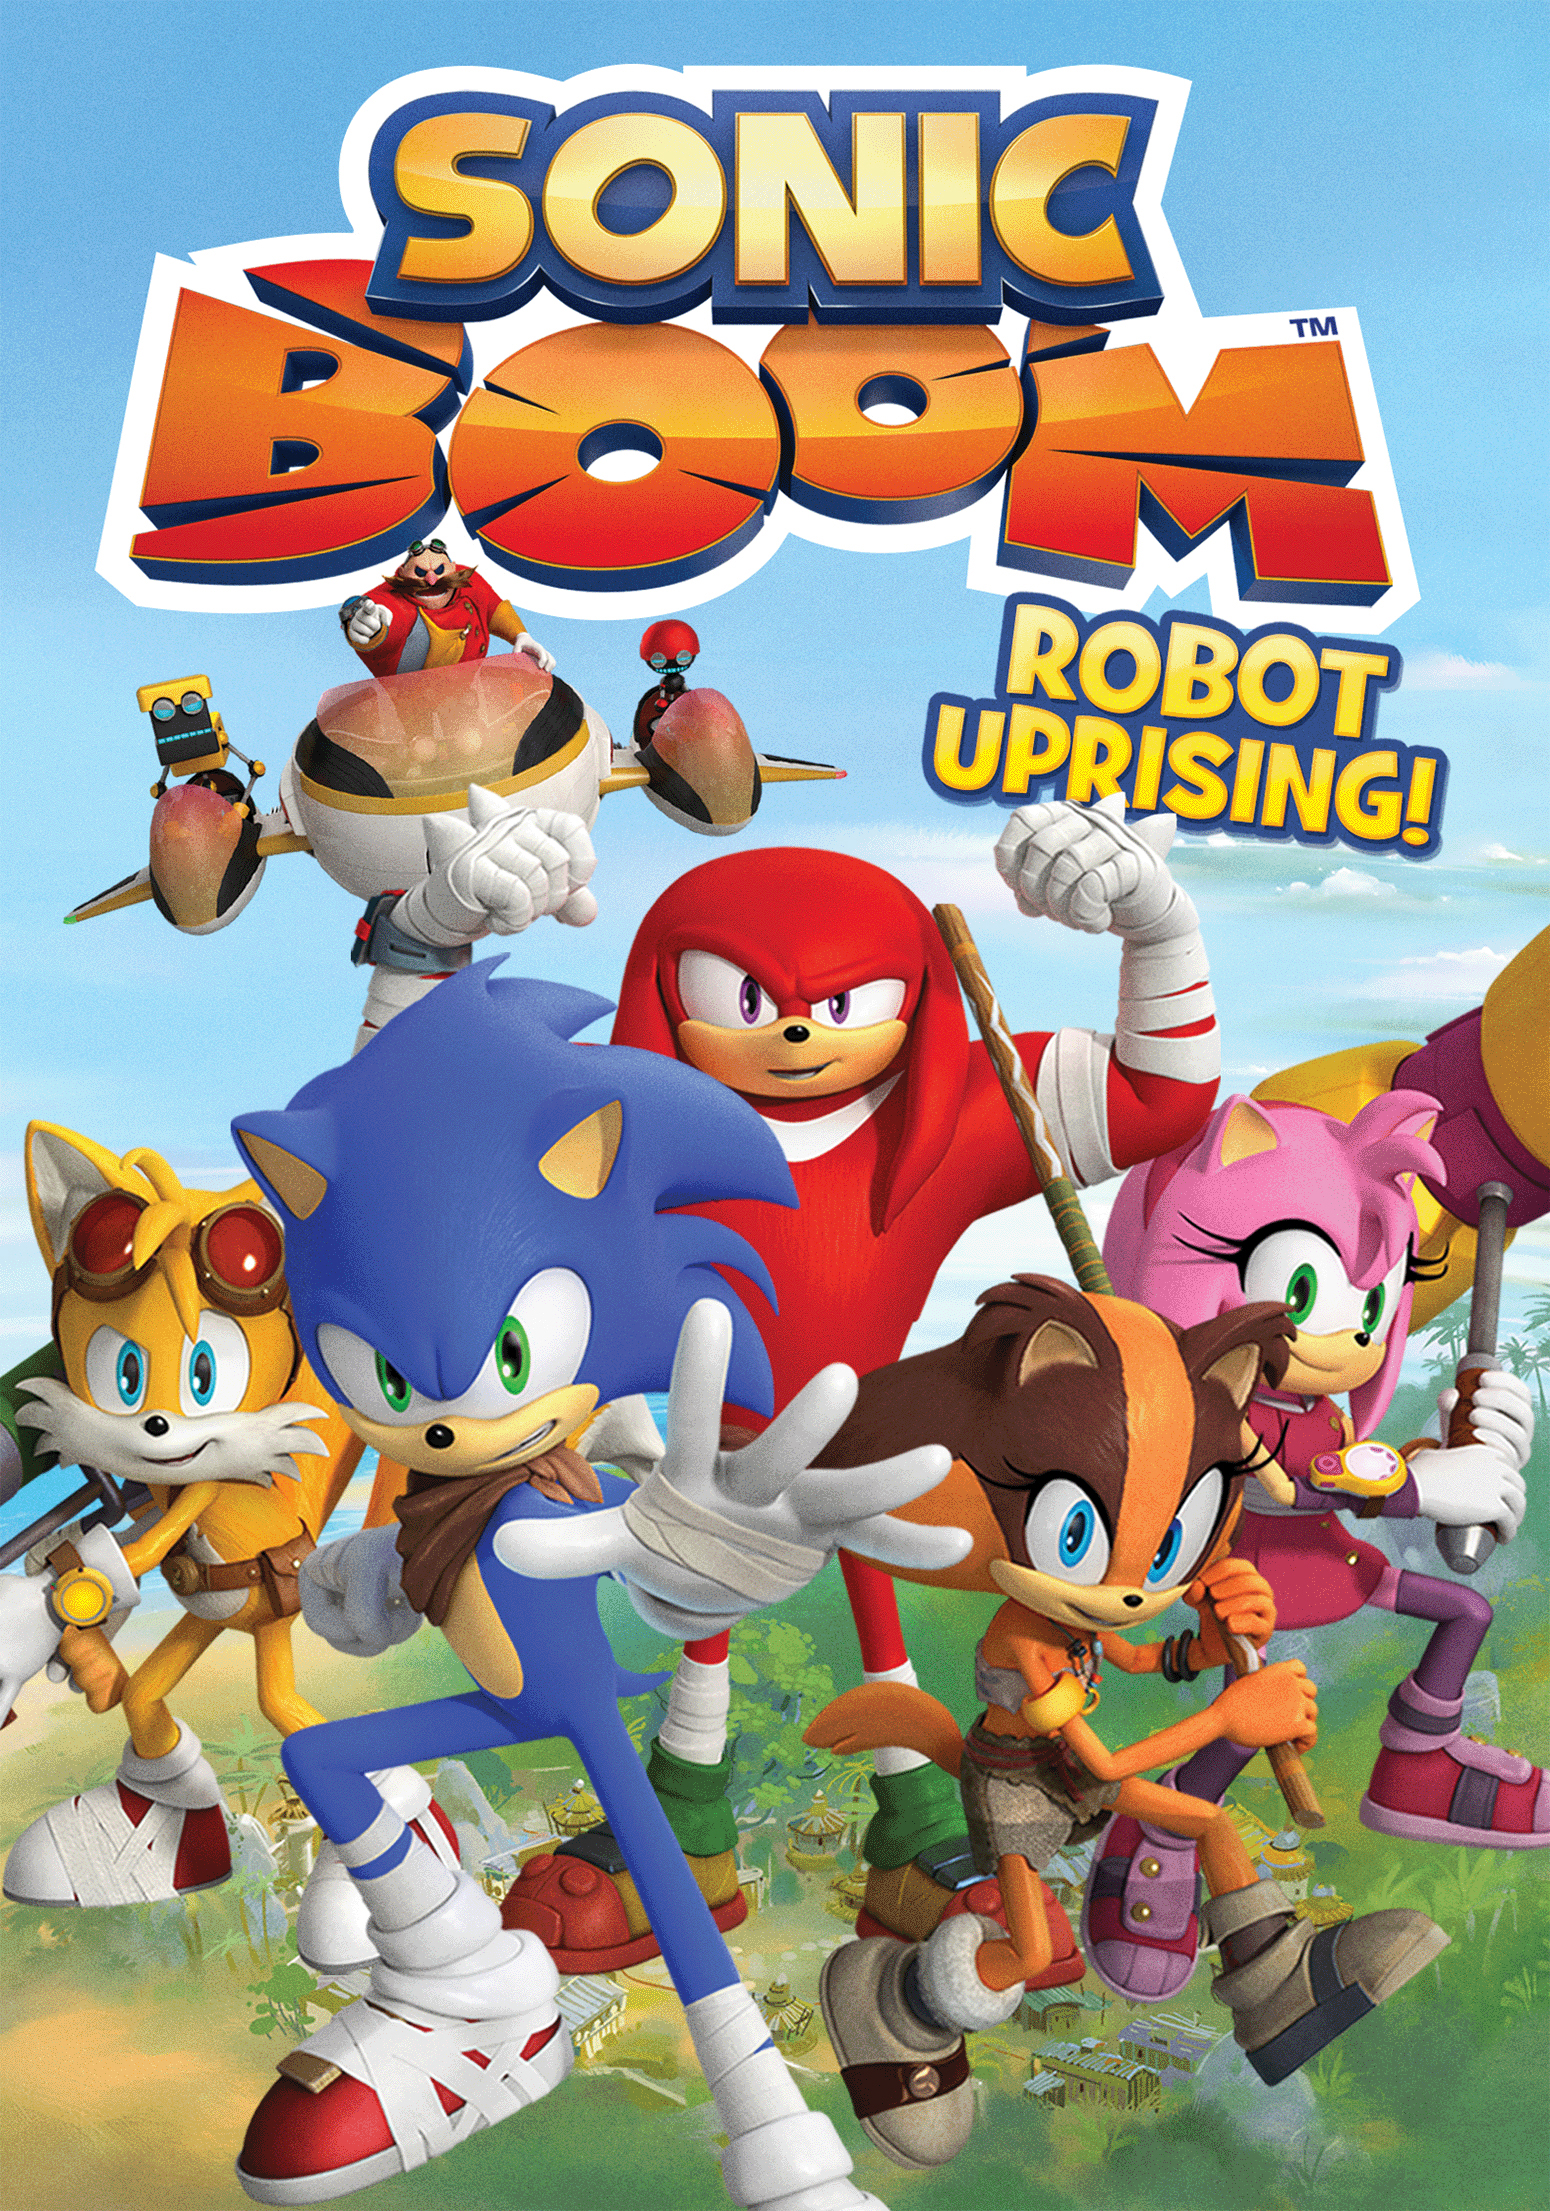 Sonic Boom: The Complete Season 1 Blu-ray